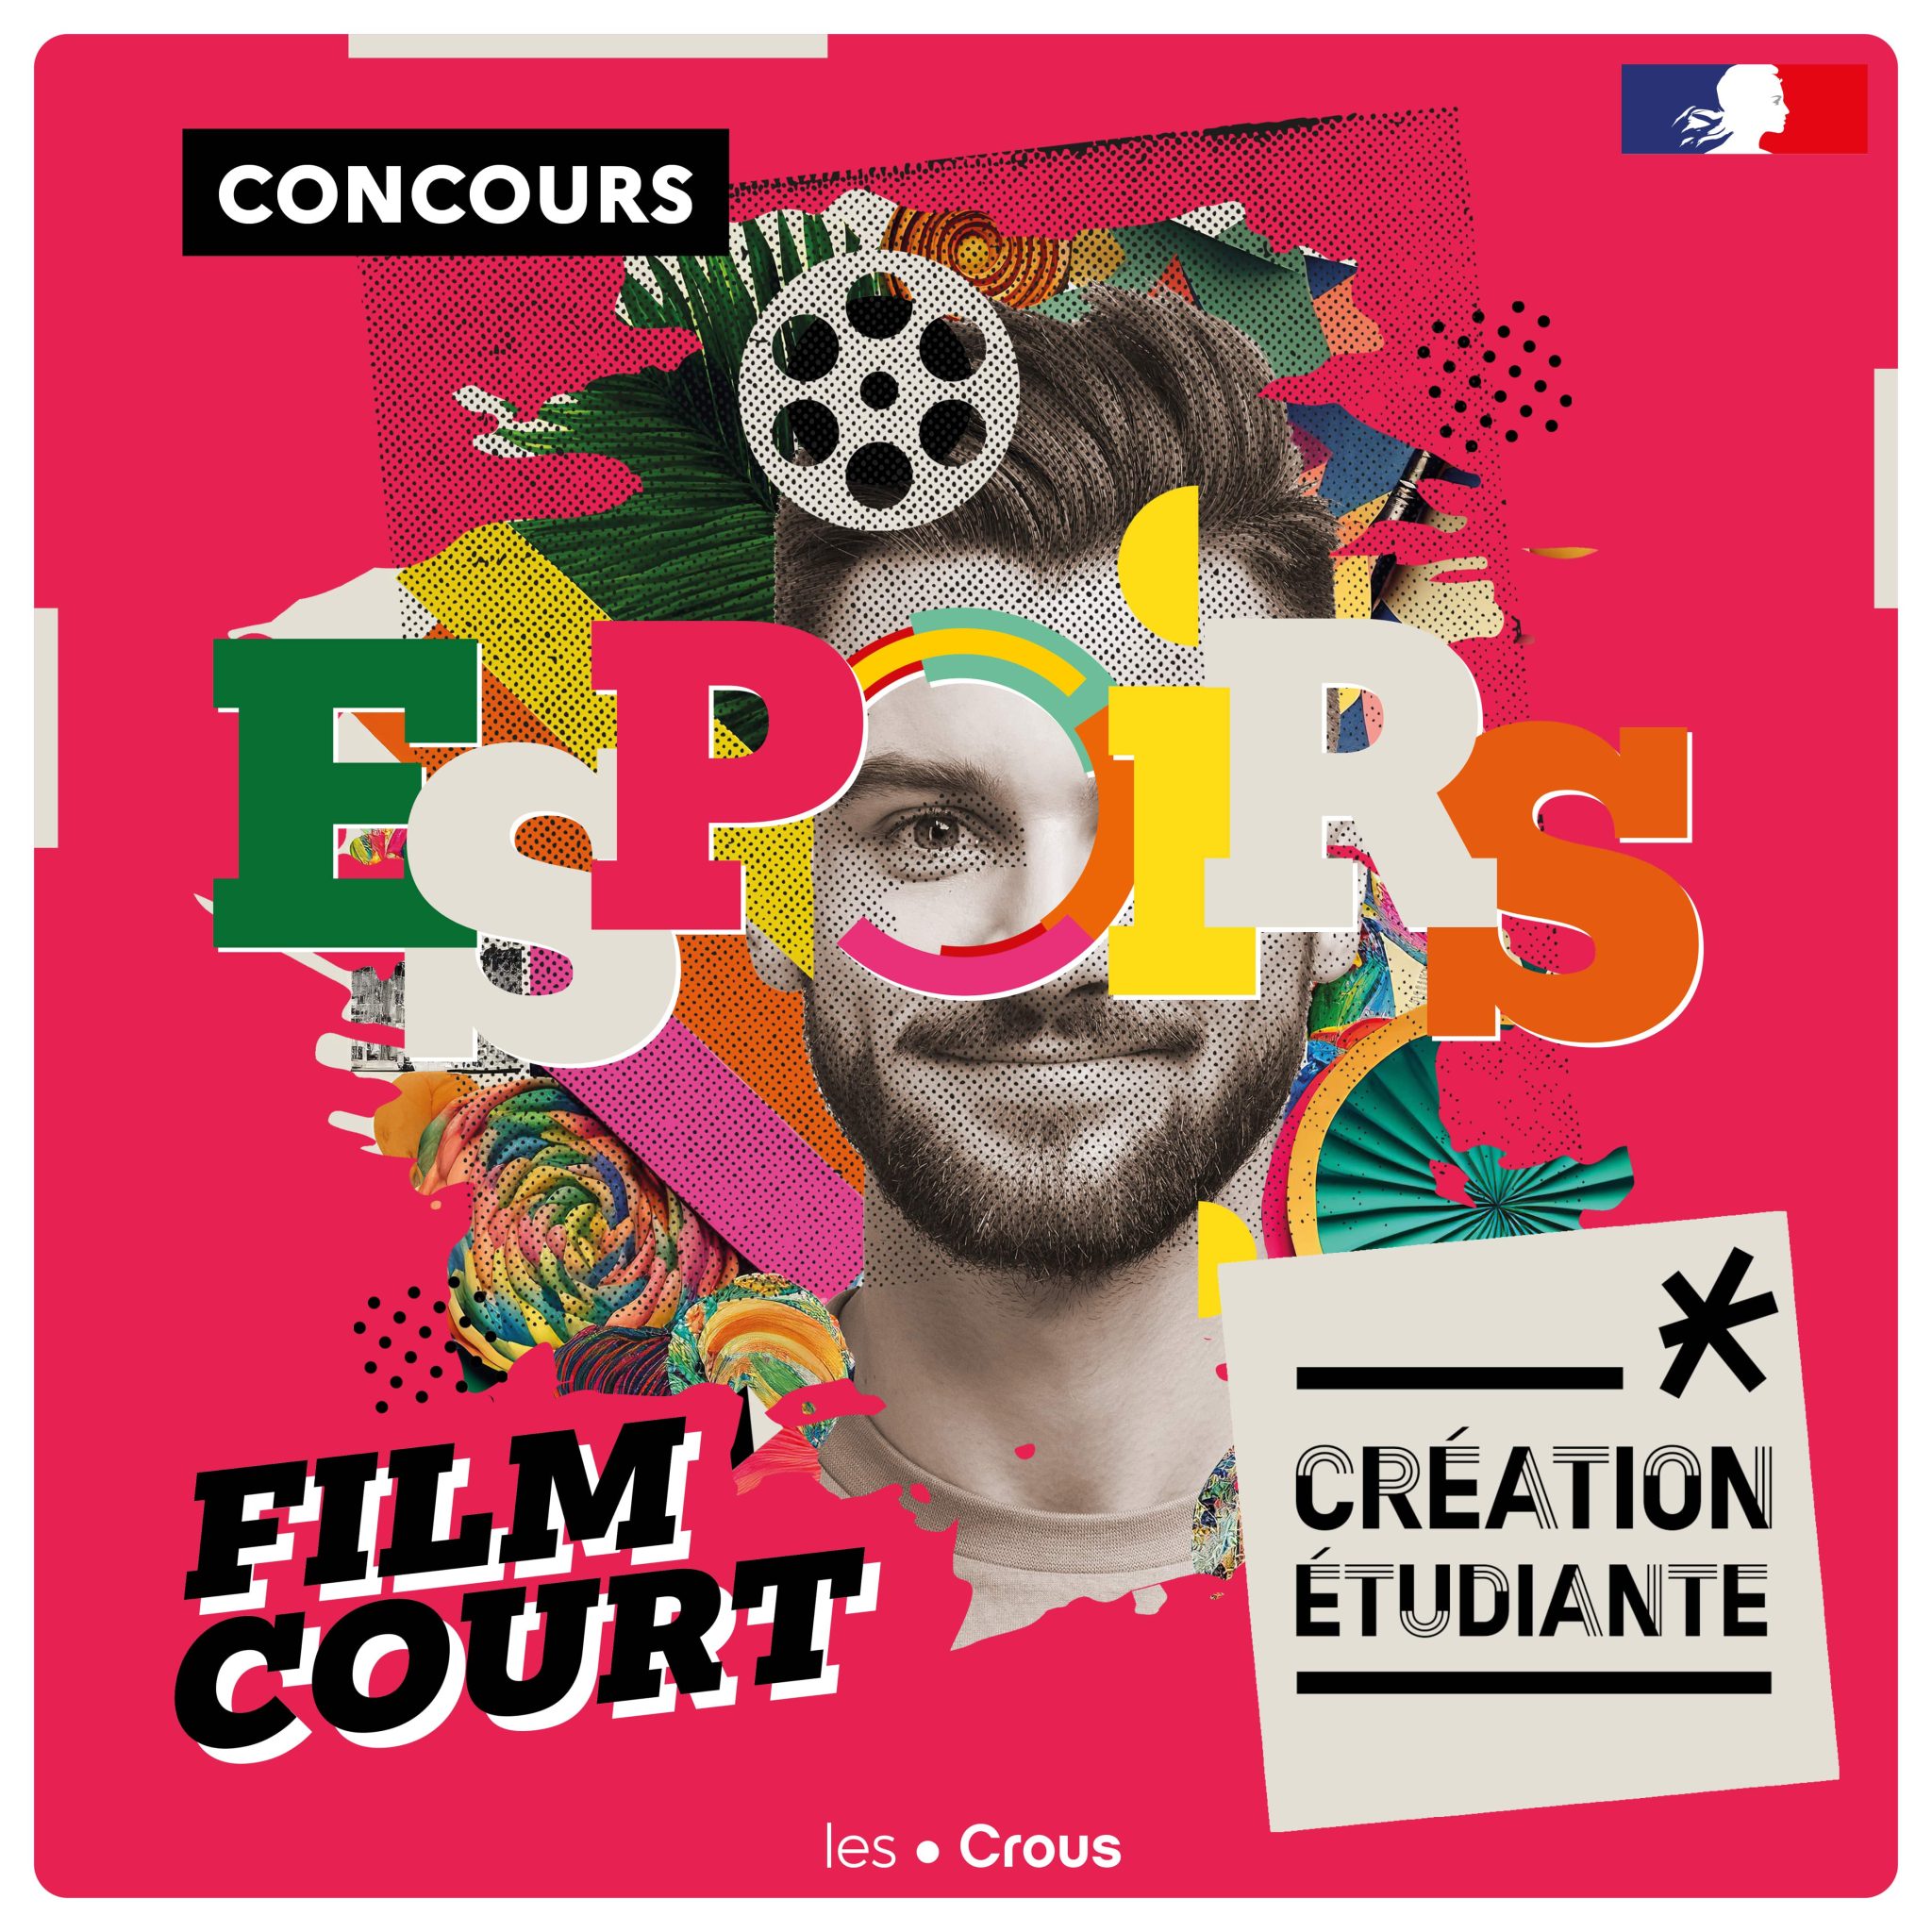 0143 23 CNOUS CAMPAGNE CULTURELLE RS CONCOURS BAT1 FILM min scaled